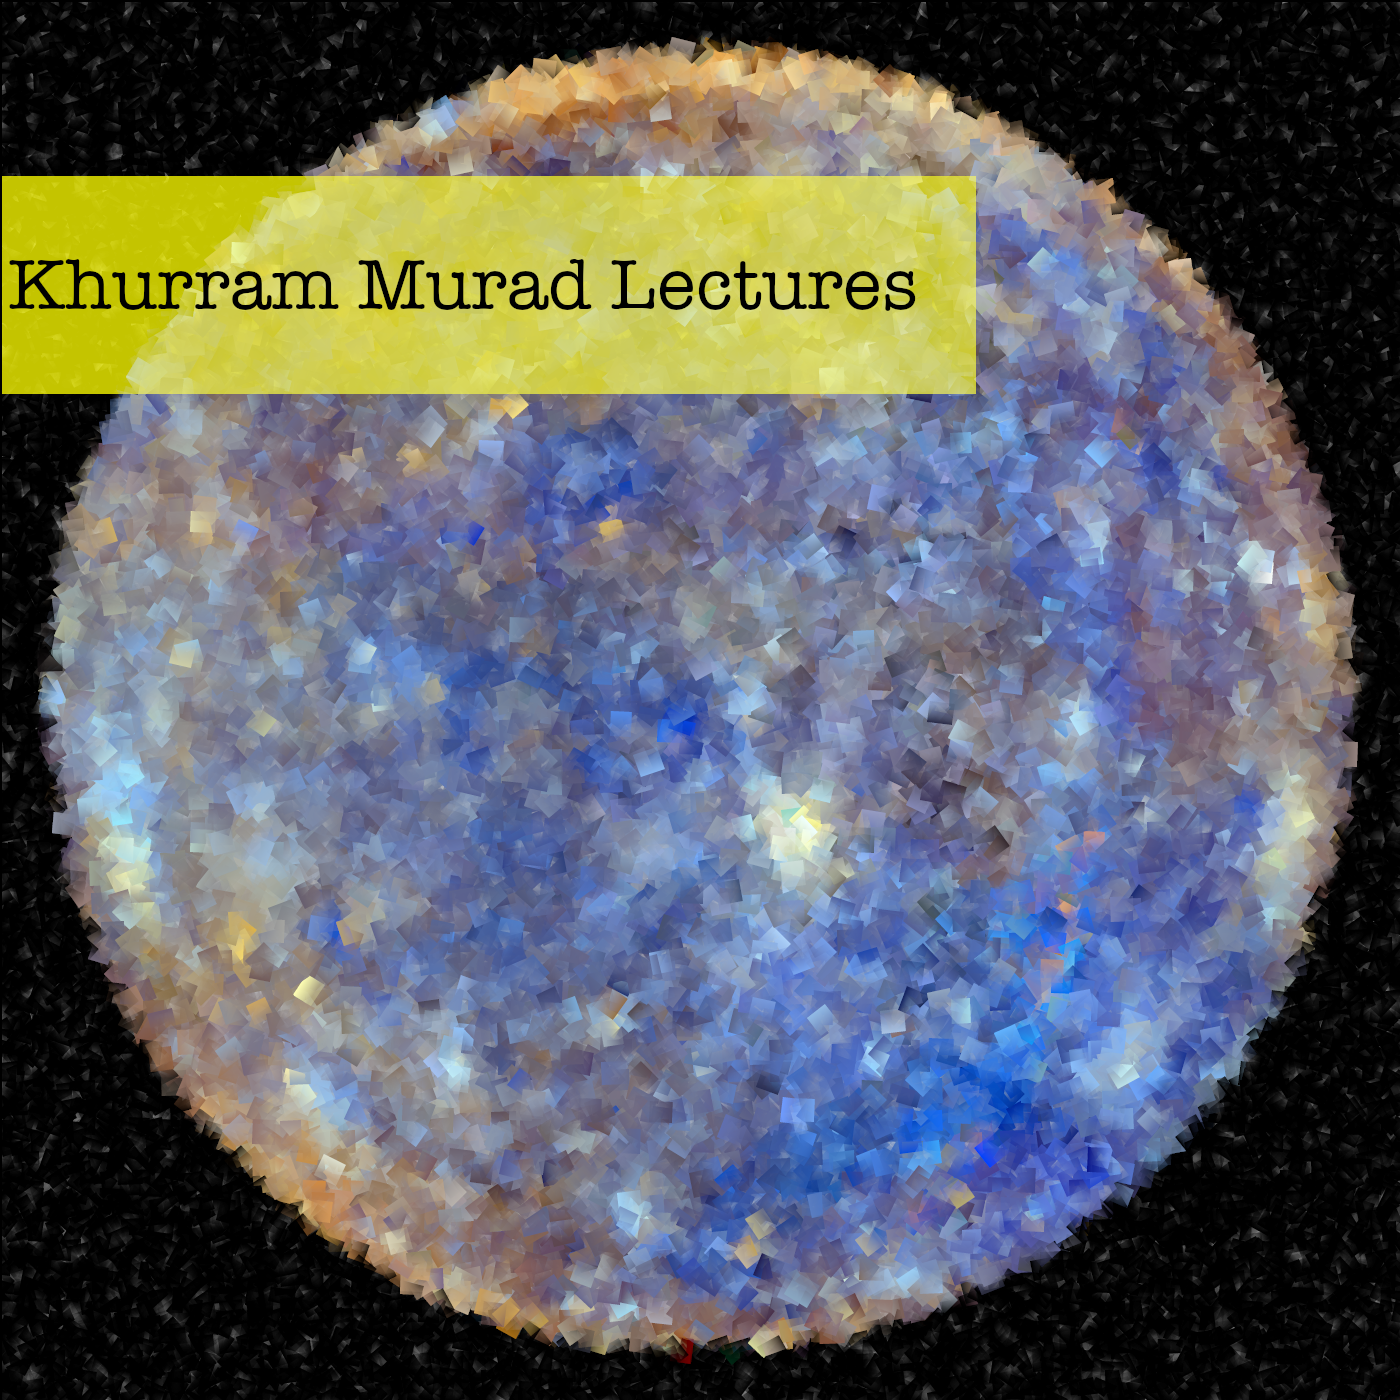 Khurram Murrad Lectures